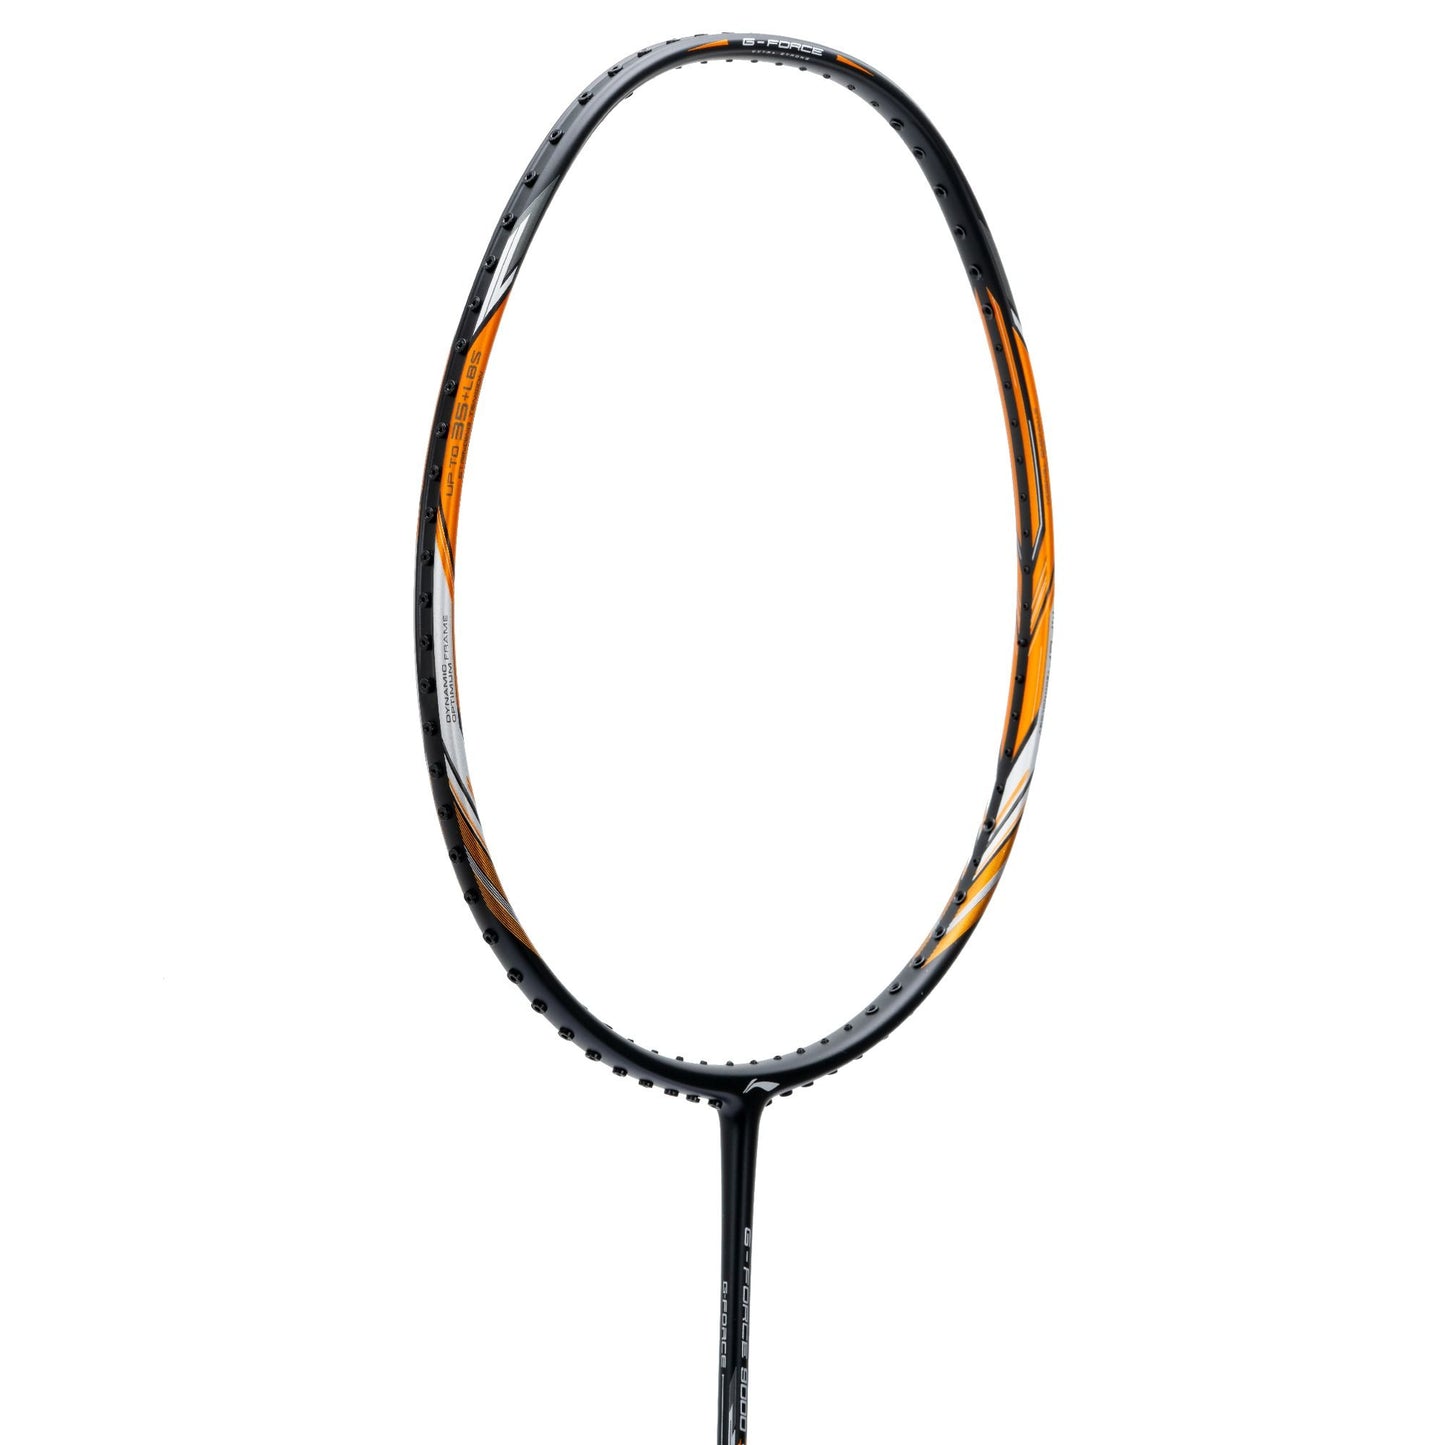 Li-Ning G-Force Extra Strong 9000 Badminton Racket (Black/Gold)